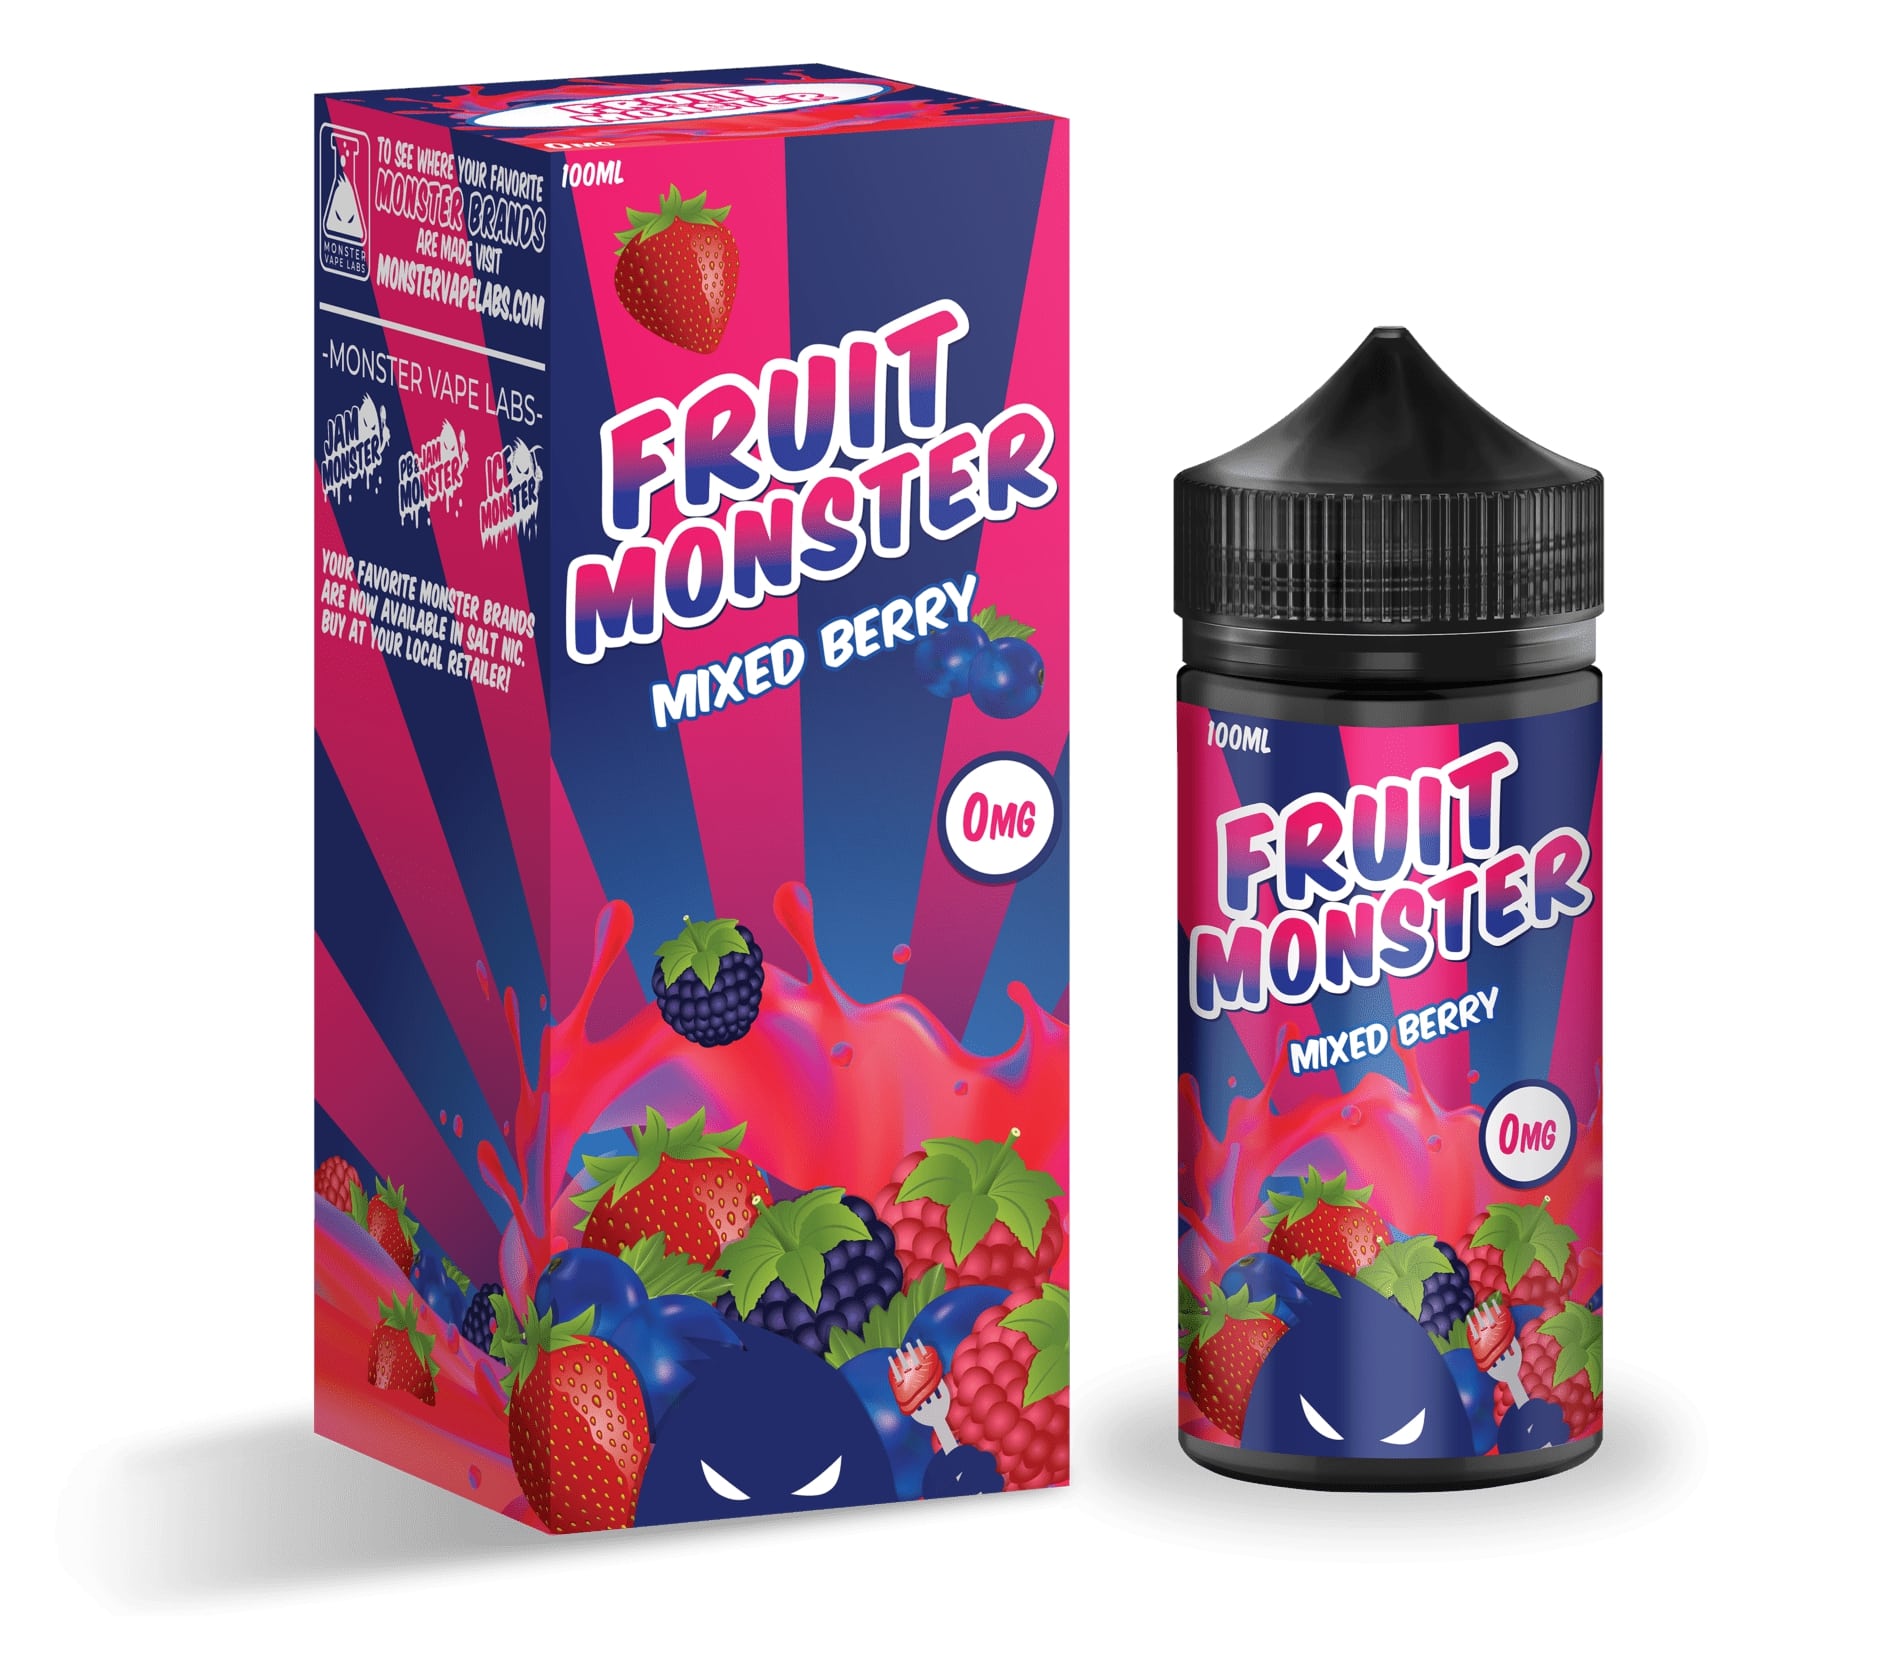 Fruit Monster Mixed Berry UK